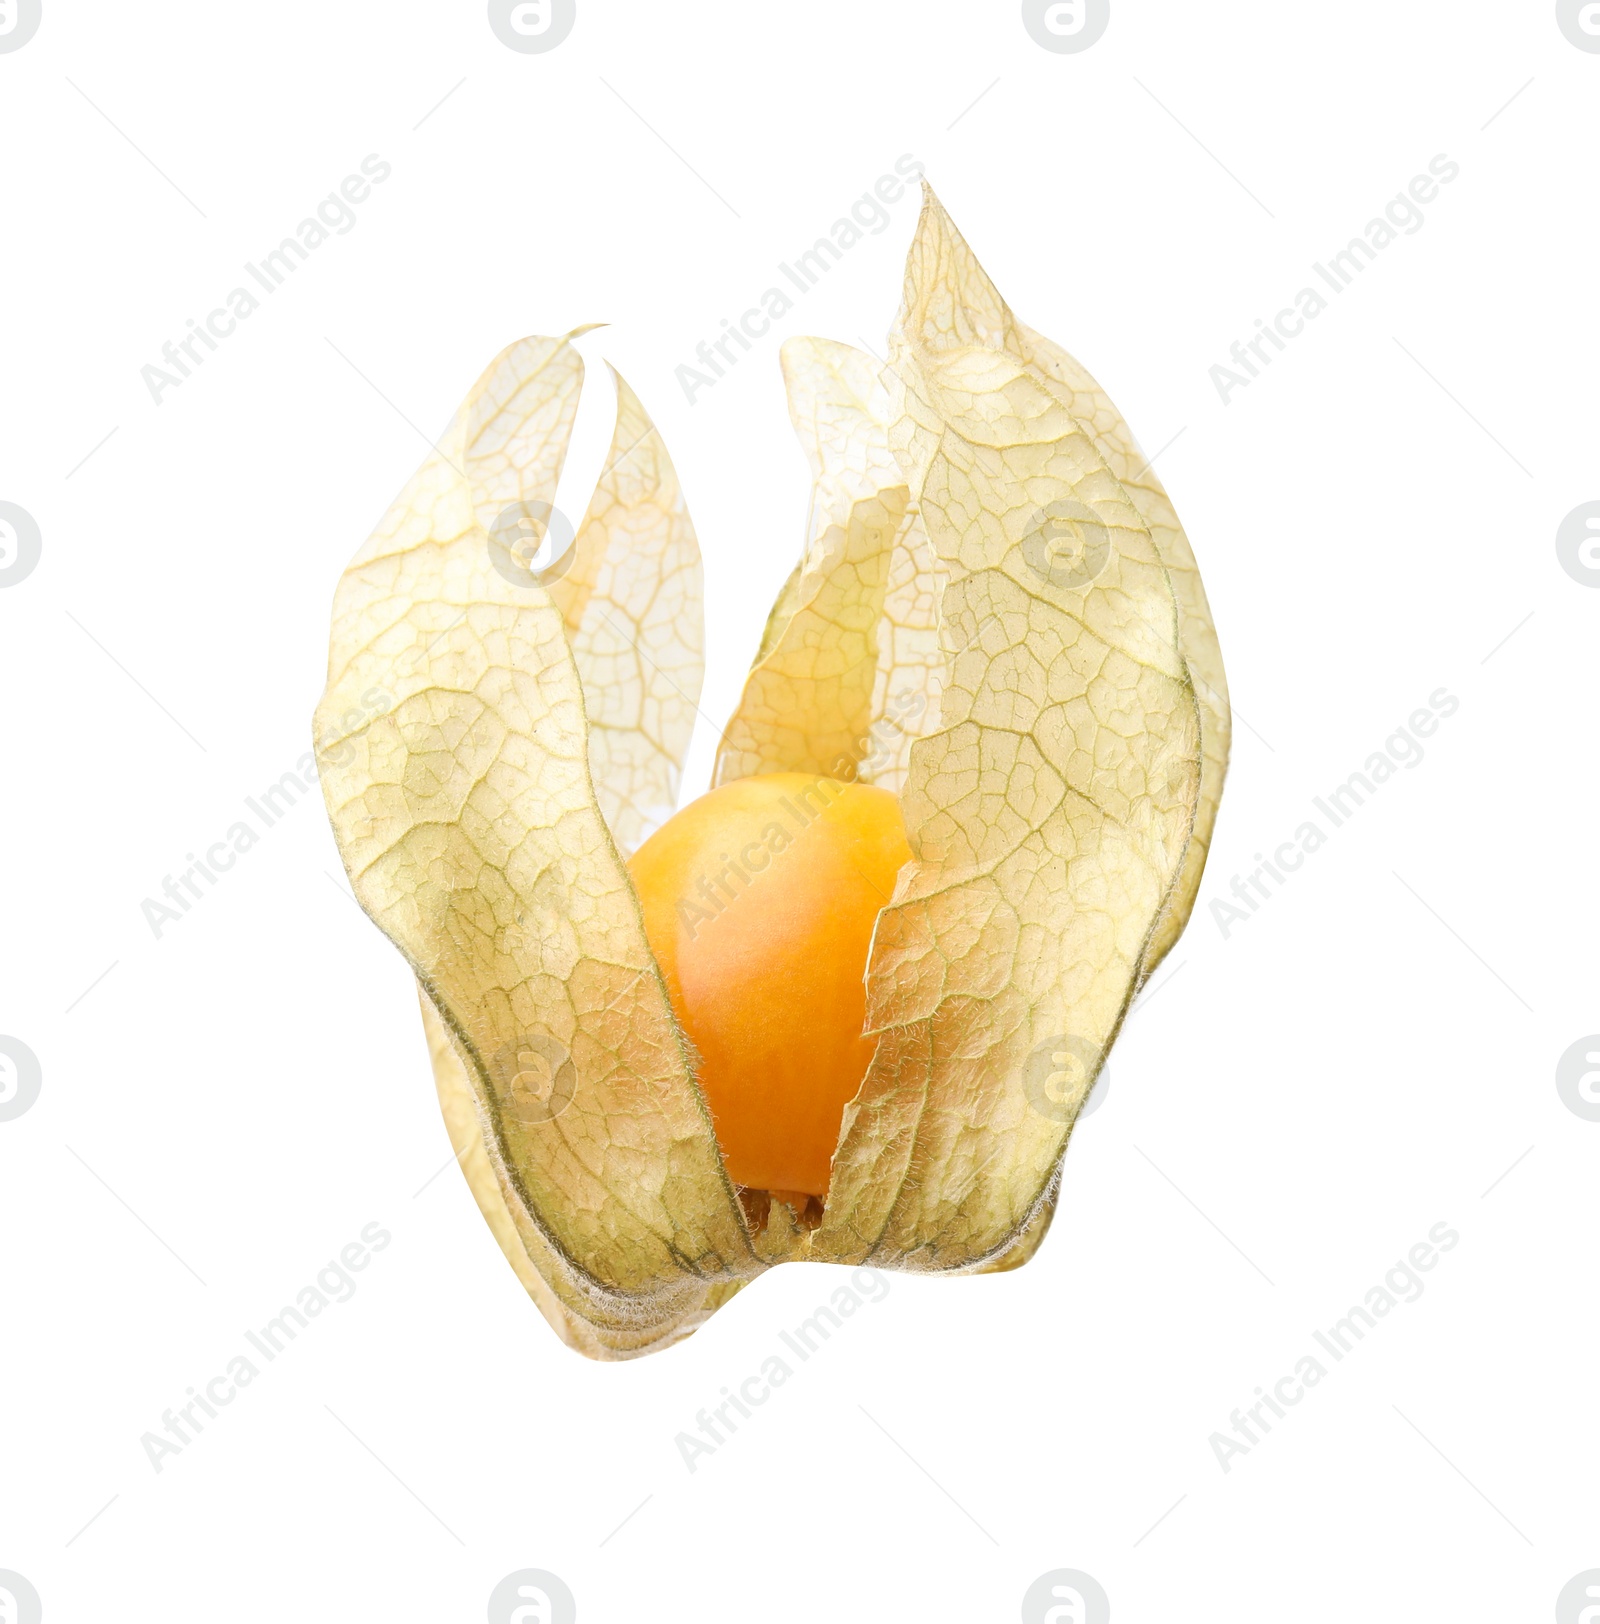 Photo of Ripe physalis fruit with calyx isolated on white